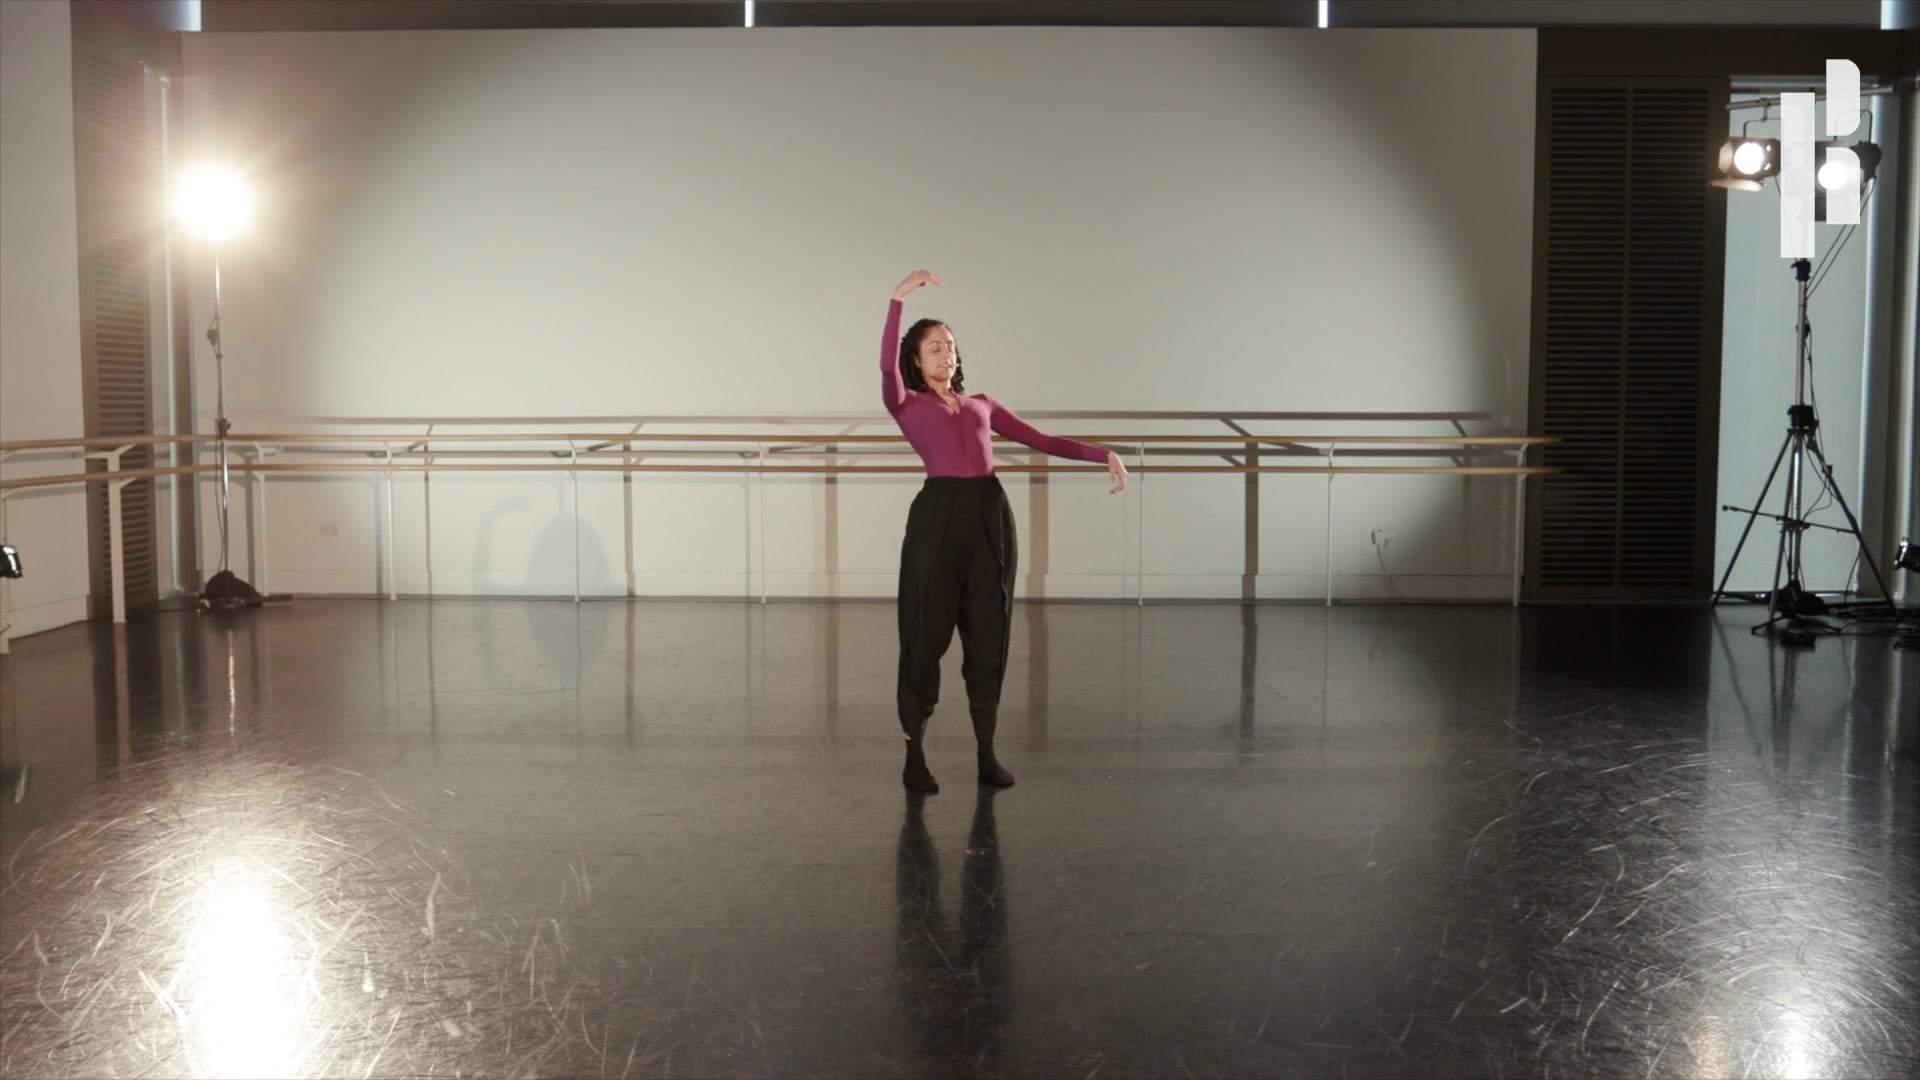 A woman is dancing in an empty dance studio.